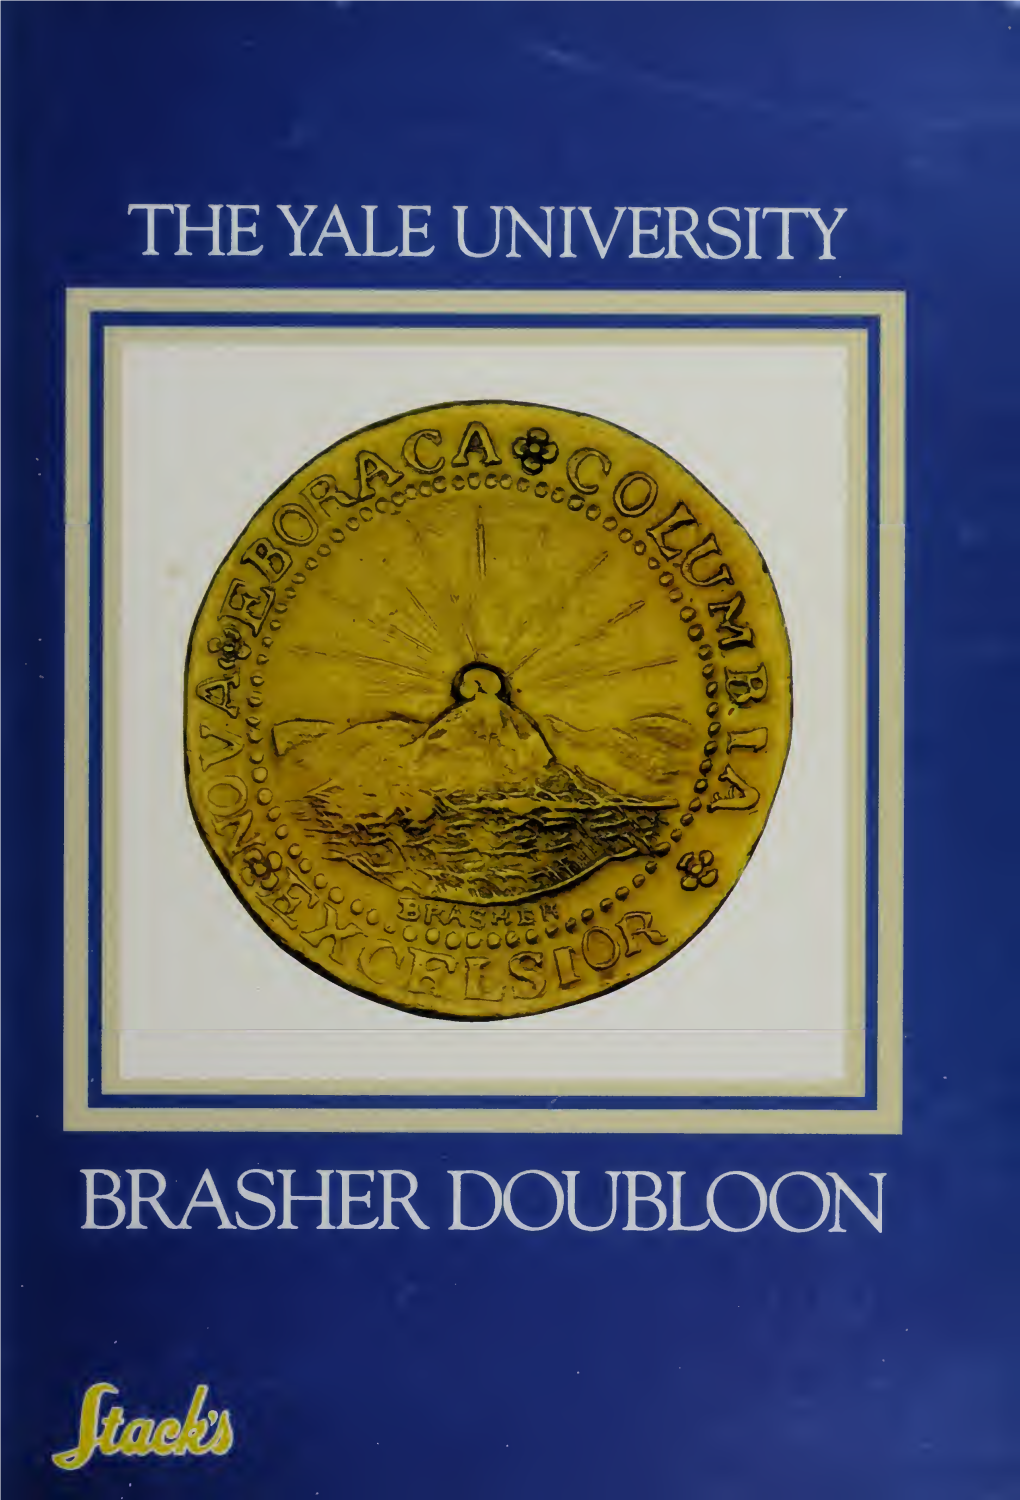 The Yale University Brasher Doubloon